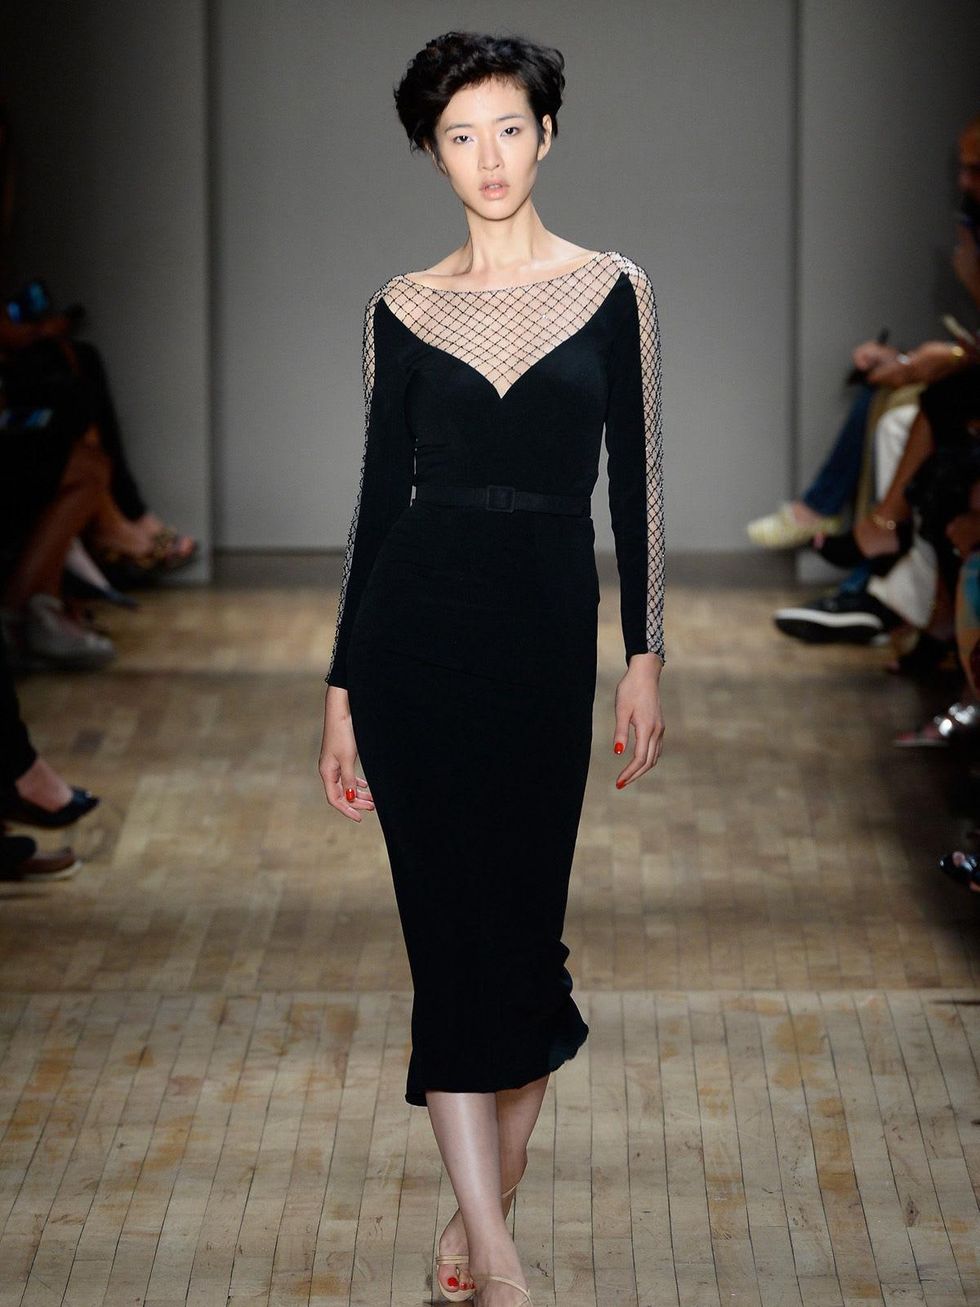 Fashion Week spring 2015 Jenny Packham black dress